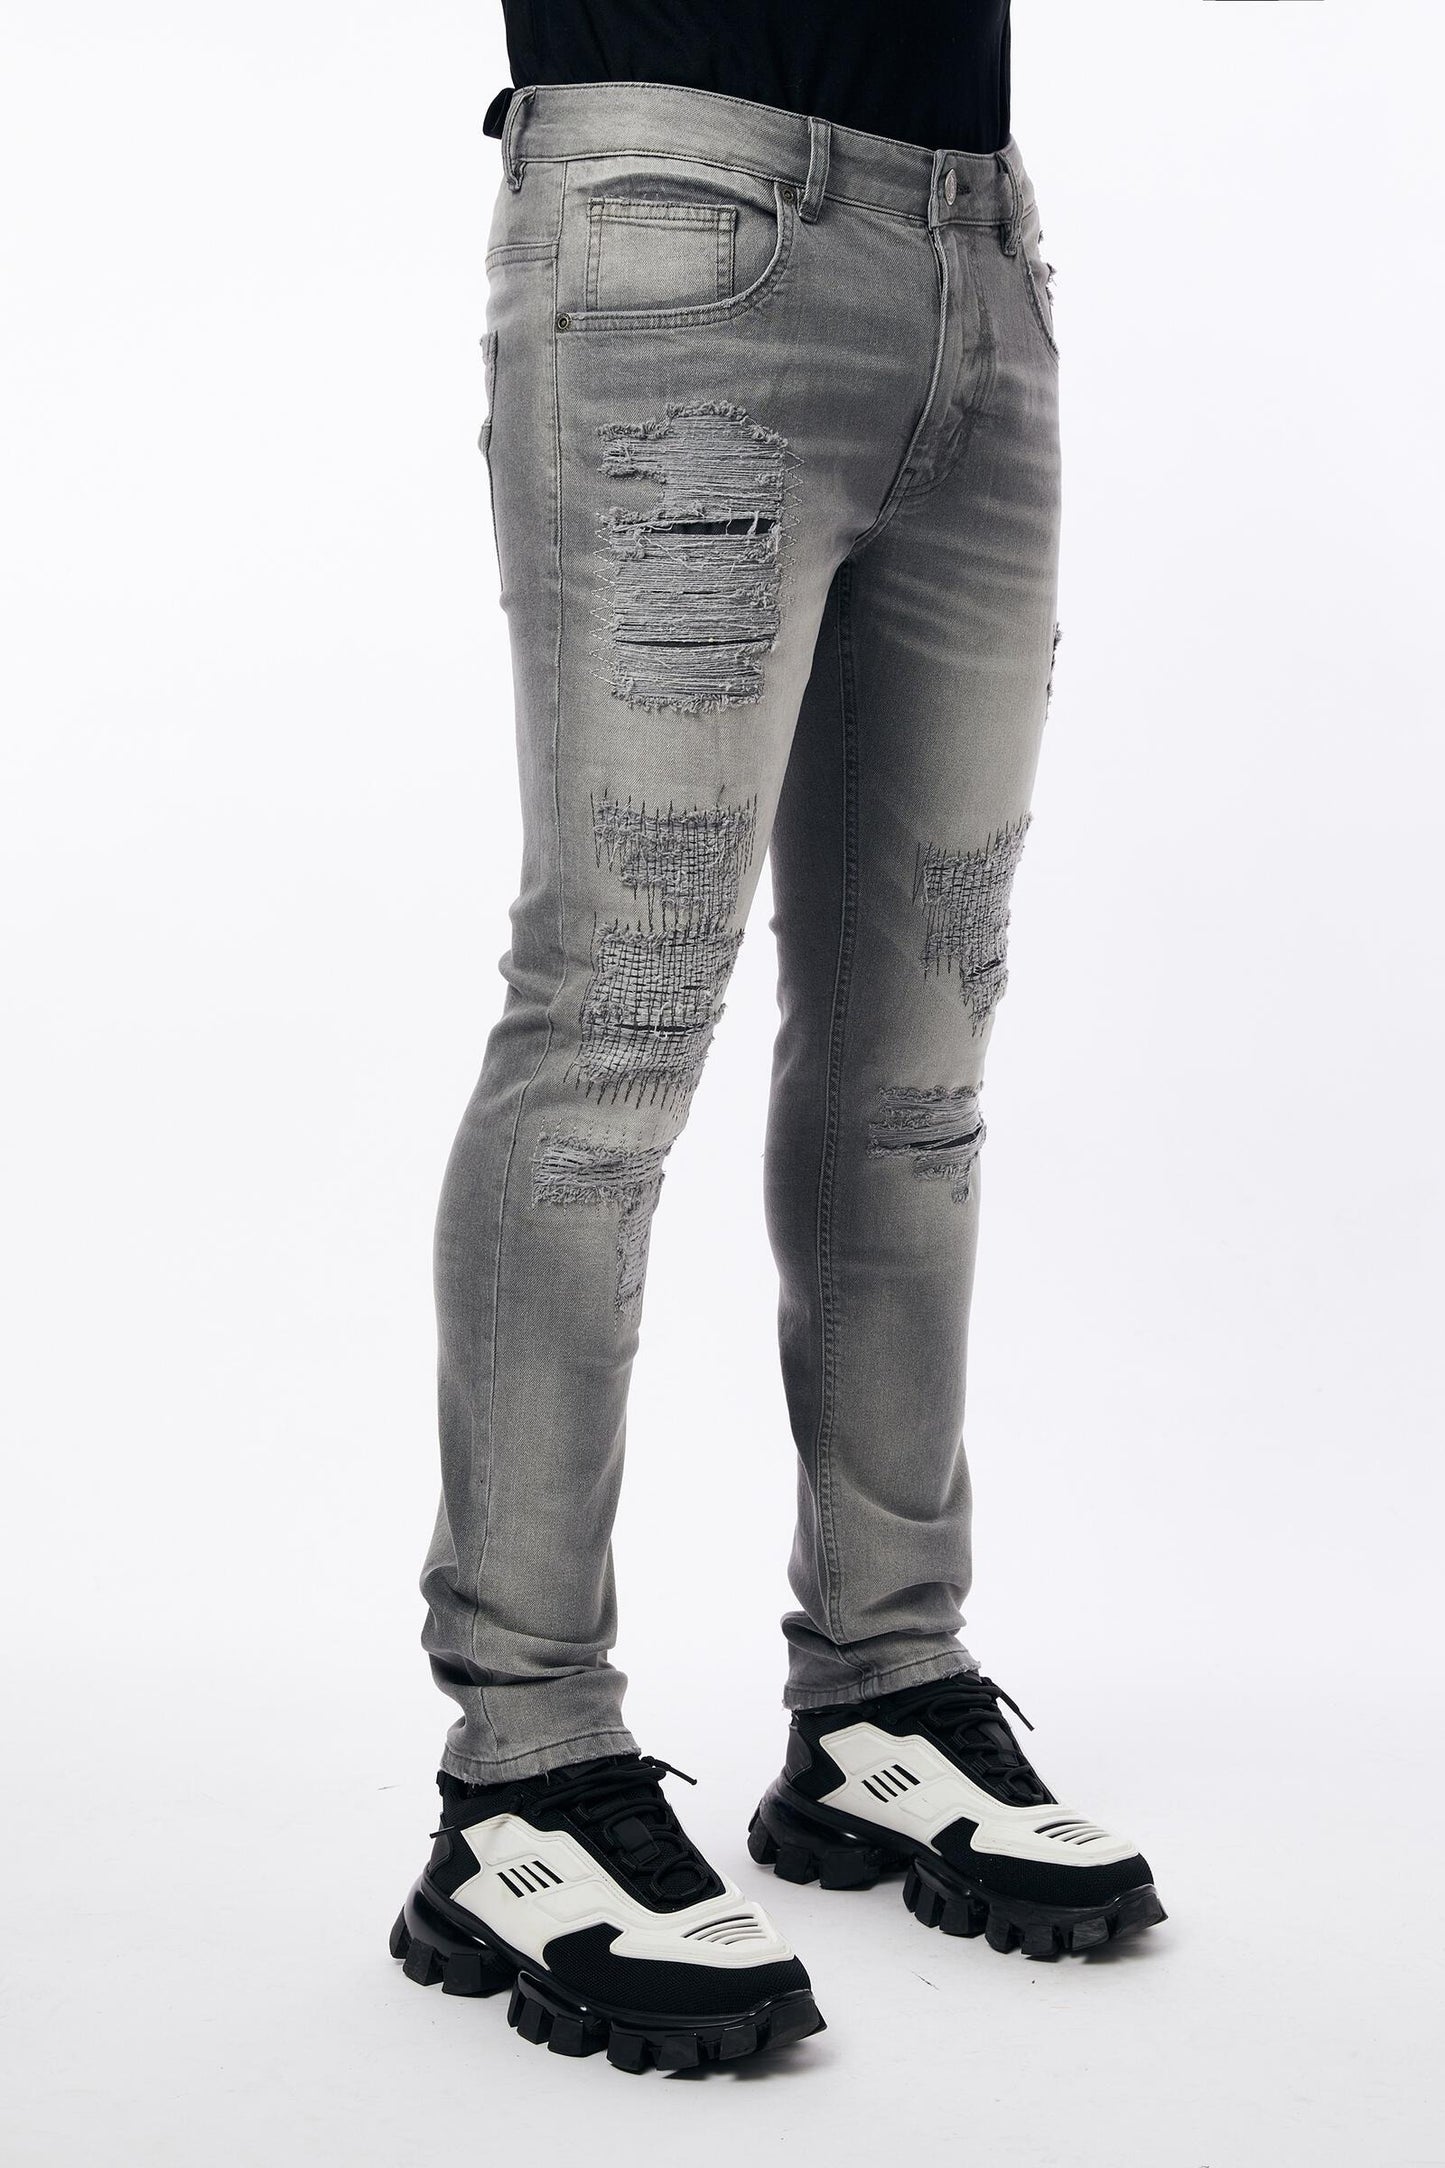 Krome Jeans - Gray